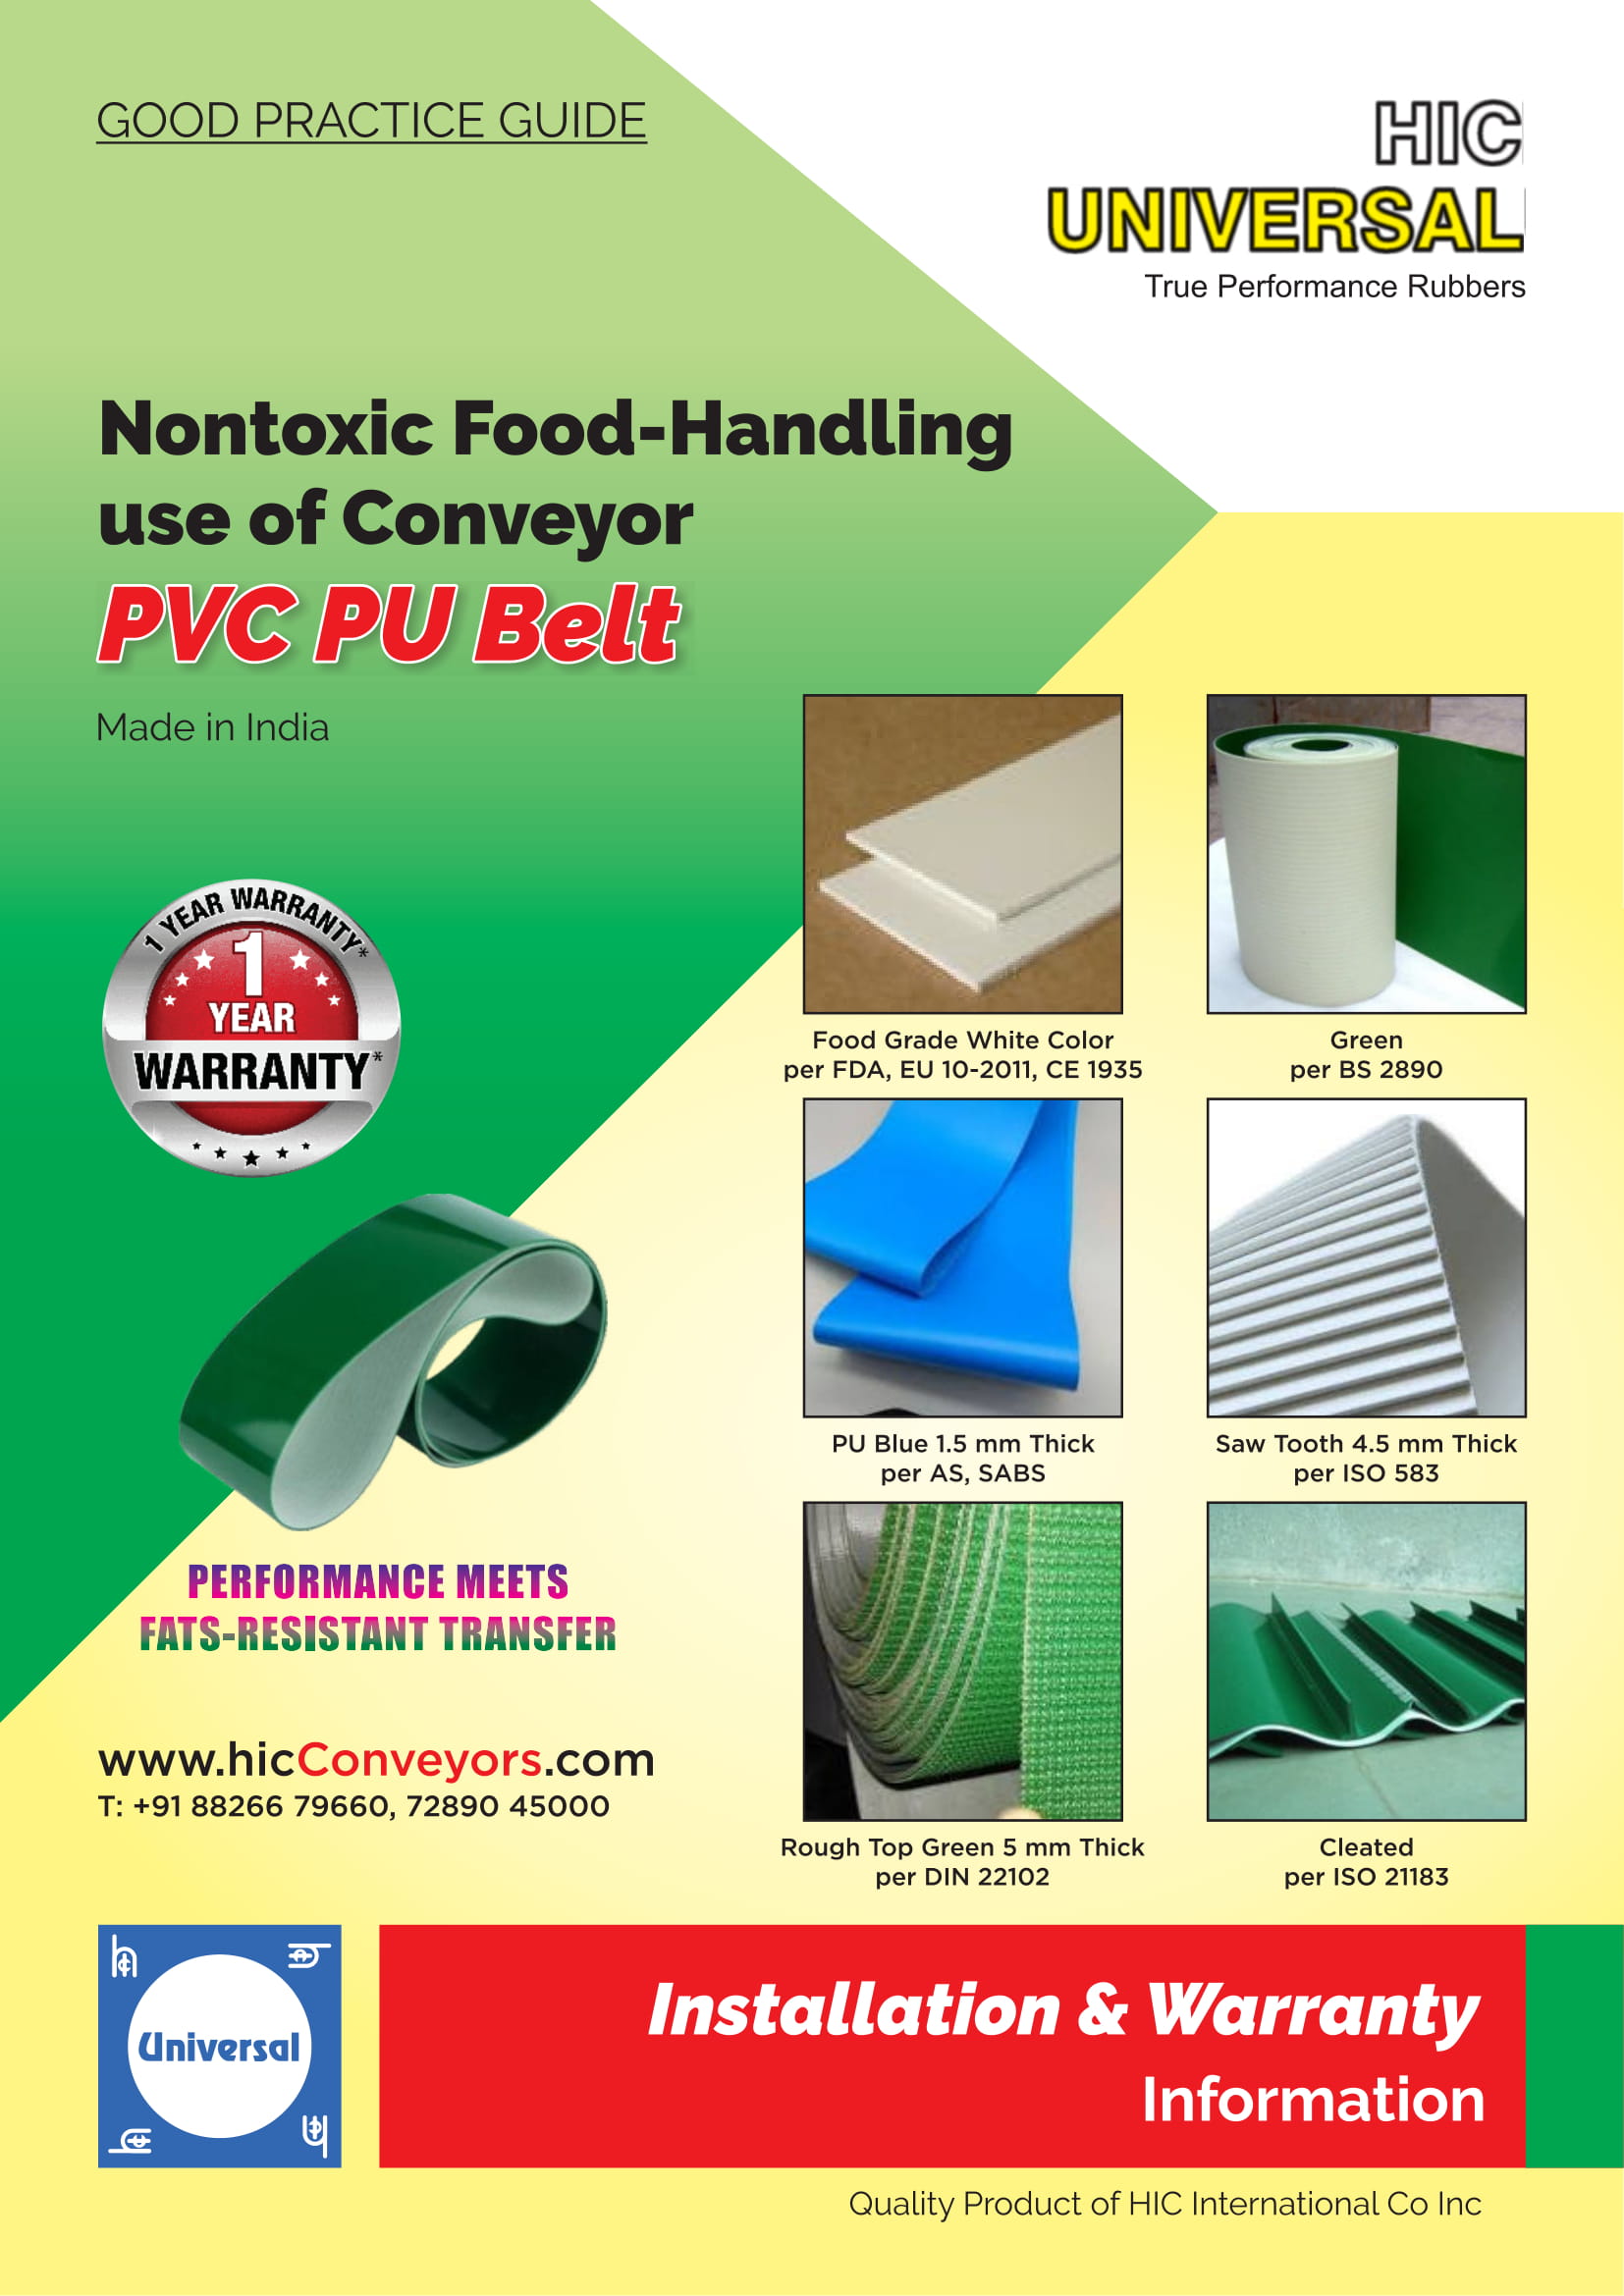 installation of belt pvc pu conveyor food handling